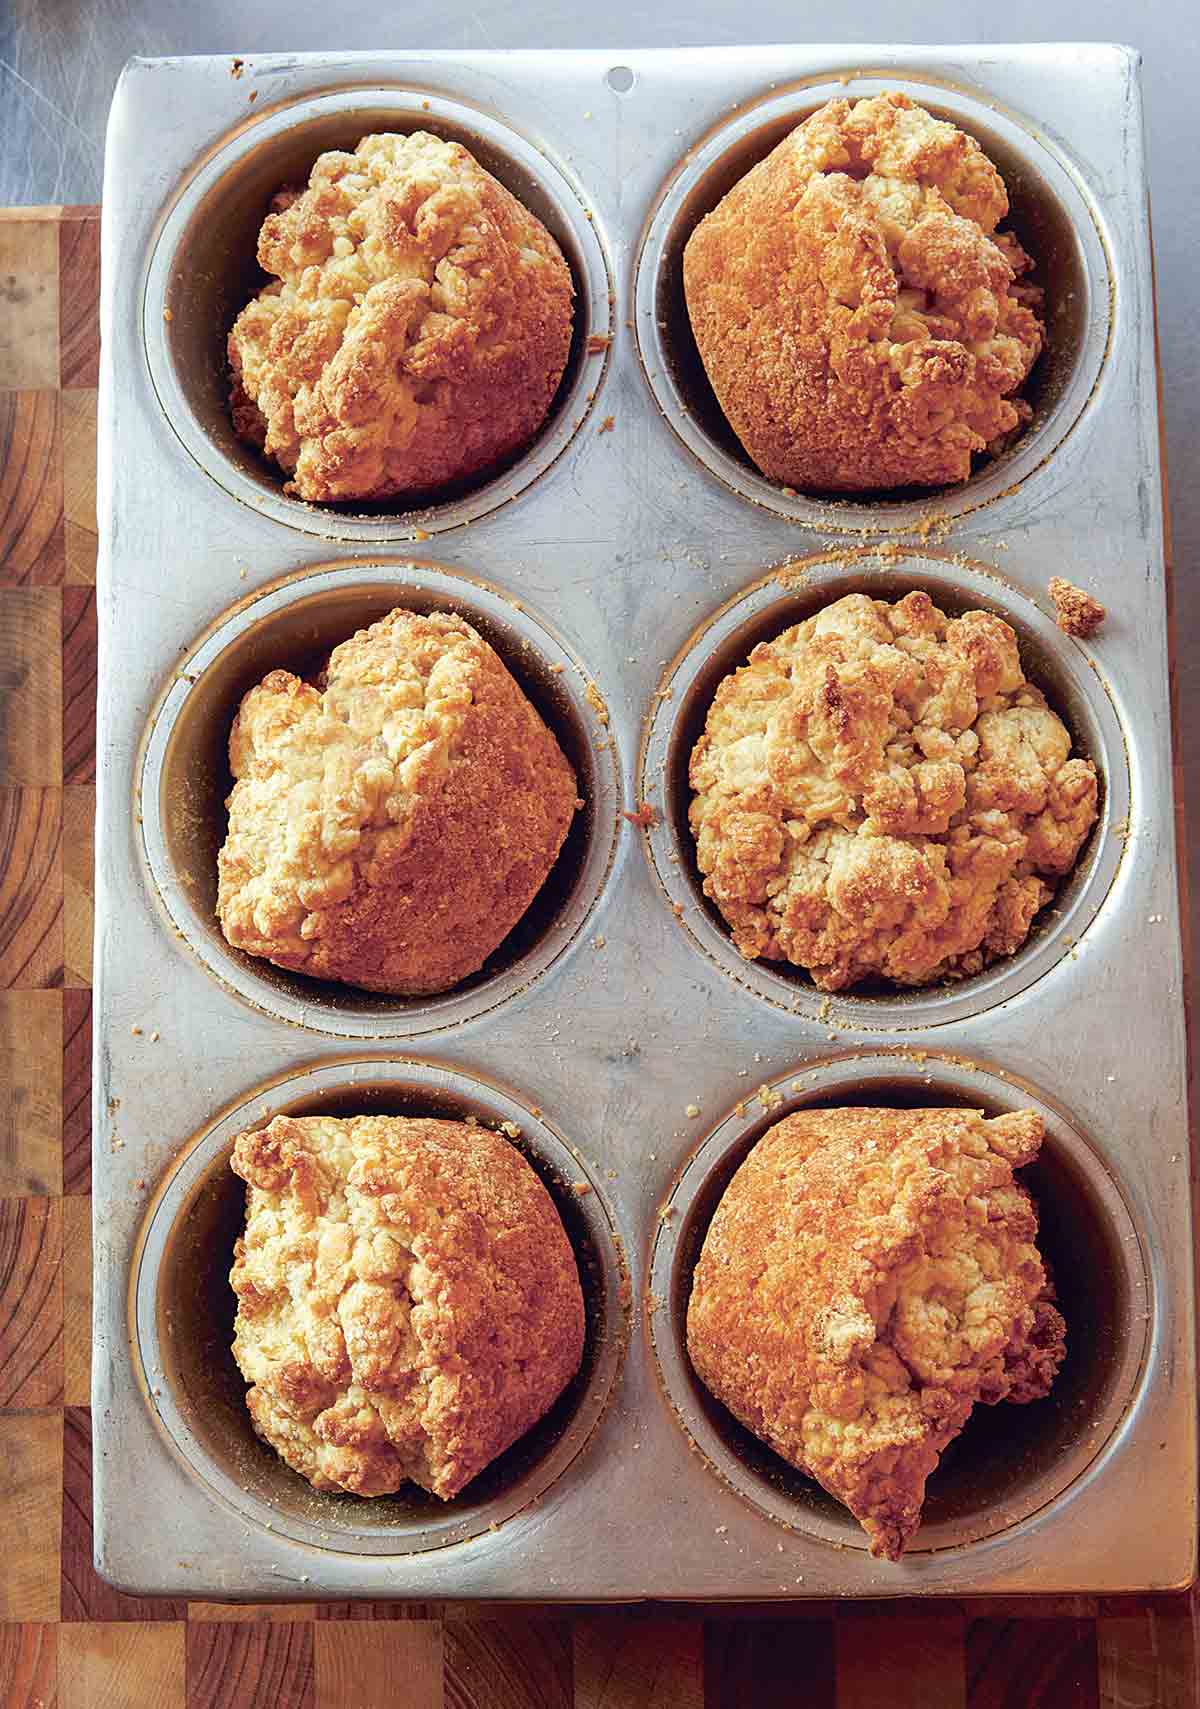 Six Alabama muffin cookies in a muffin tin.